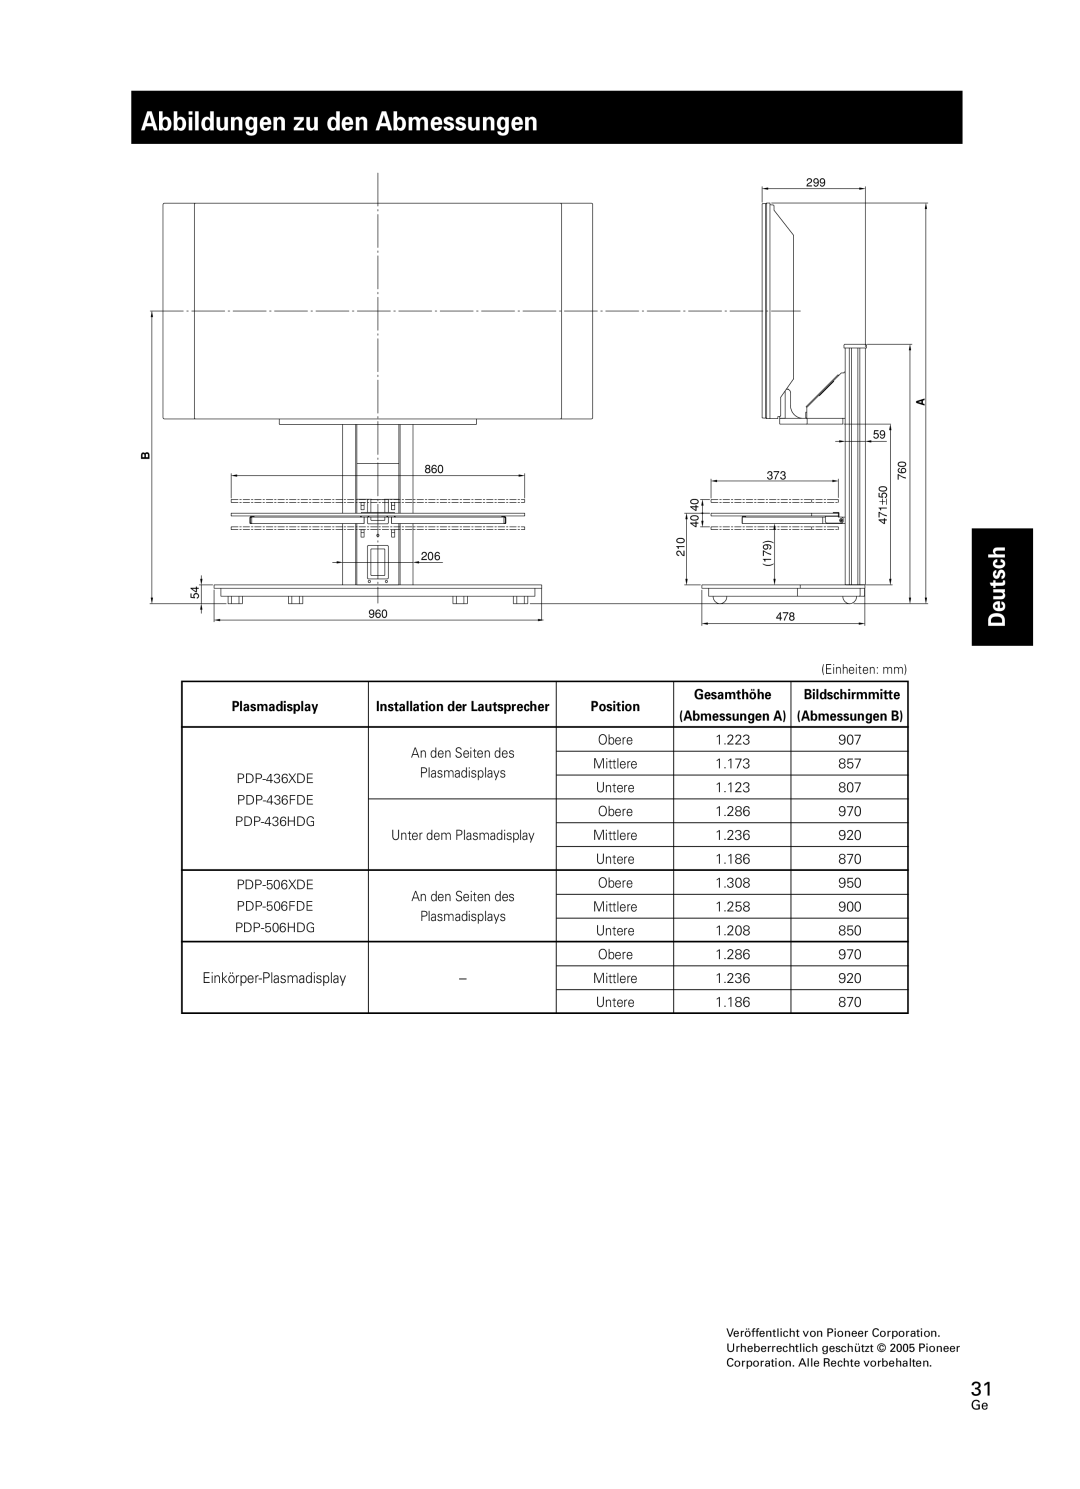 Pioneer PDK-FS05 manual Abbildungen zu den Abmessungen, Deutsch, Position, Gesamthöhe, Bildschirmmitte, Abmessungen A 